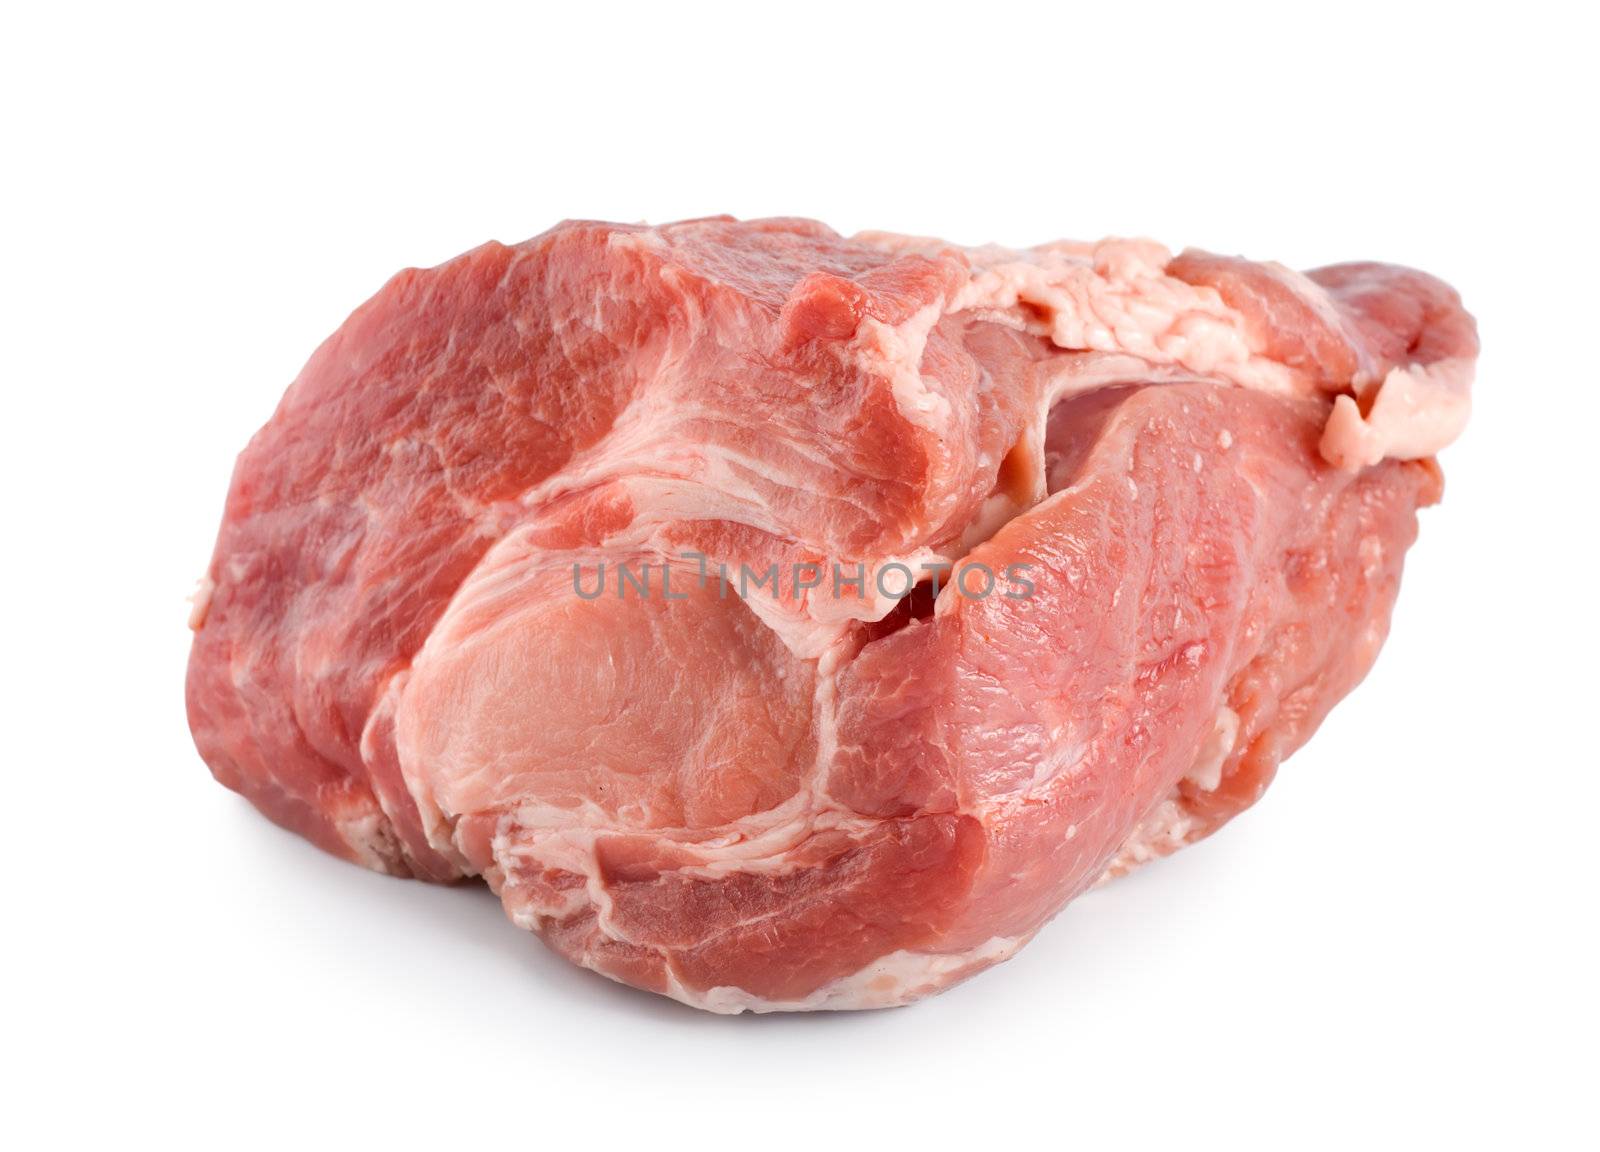 Raw pork tenderloin by Givaga